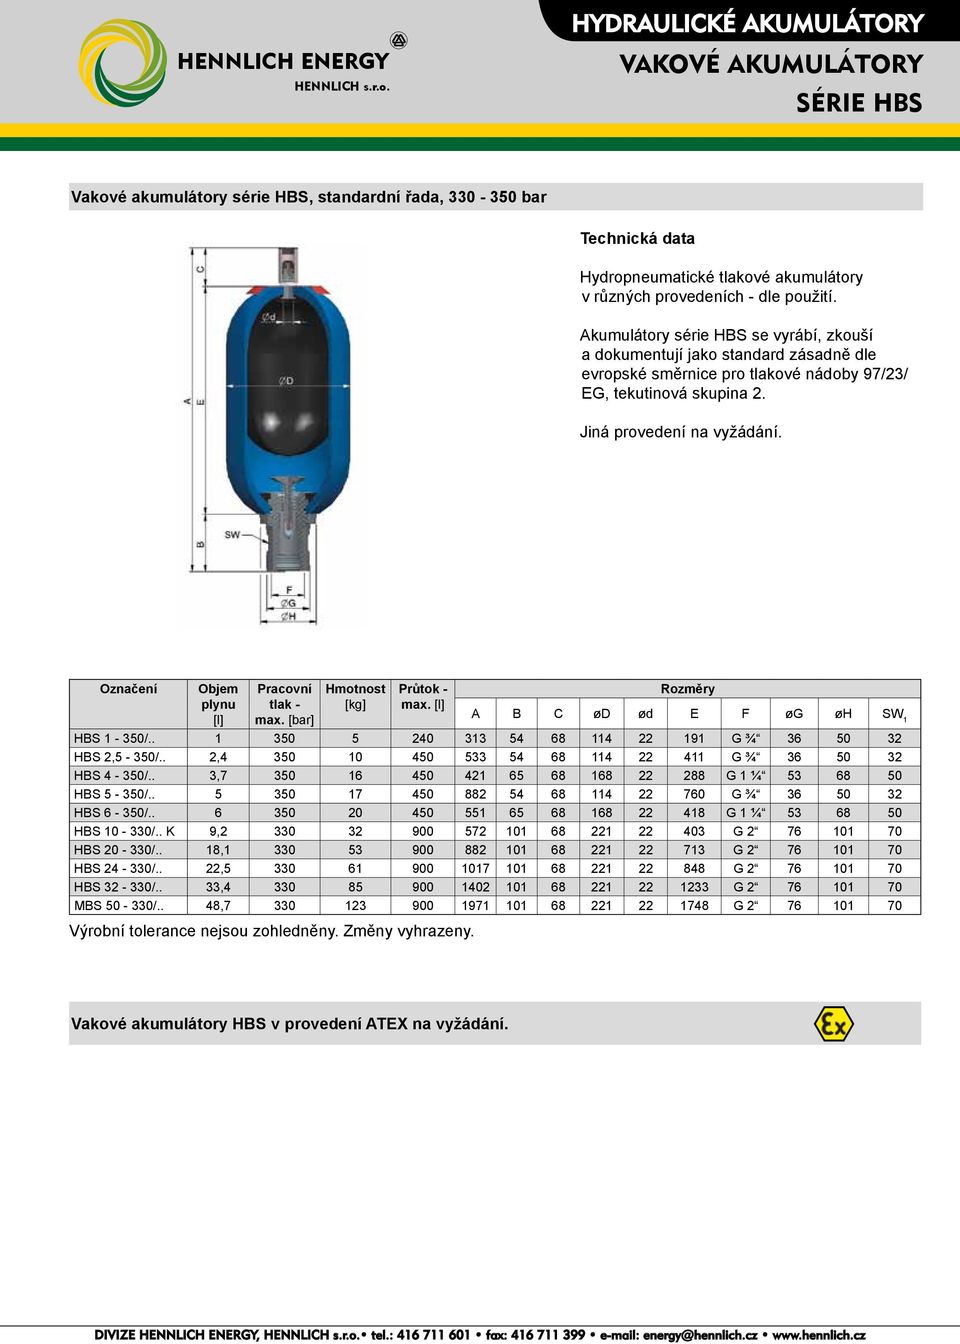 Označení Objem plynu [l] Pracovní tlak - max. [bar] Hmotnost [kg] Průtok - max. [l] Rozměry A B C ød ød E F øg øh SW 1 HBS 1-350/.. 1 350 5 240 313 54 68 114 22 191 G ¾ 36 50 32 HBS 2,5-350/.